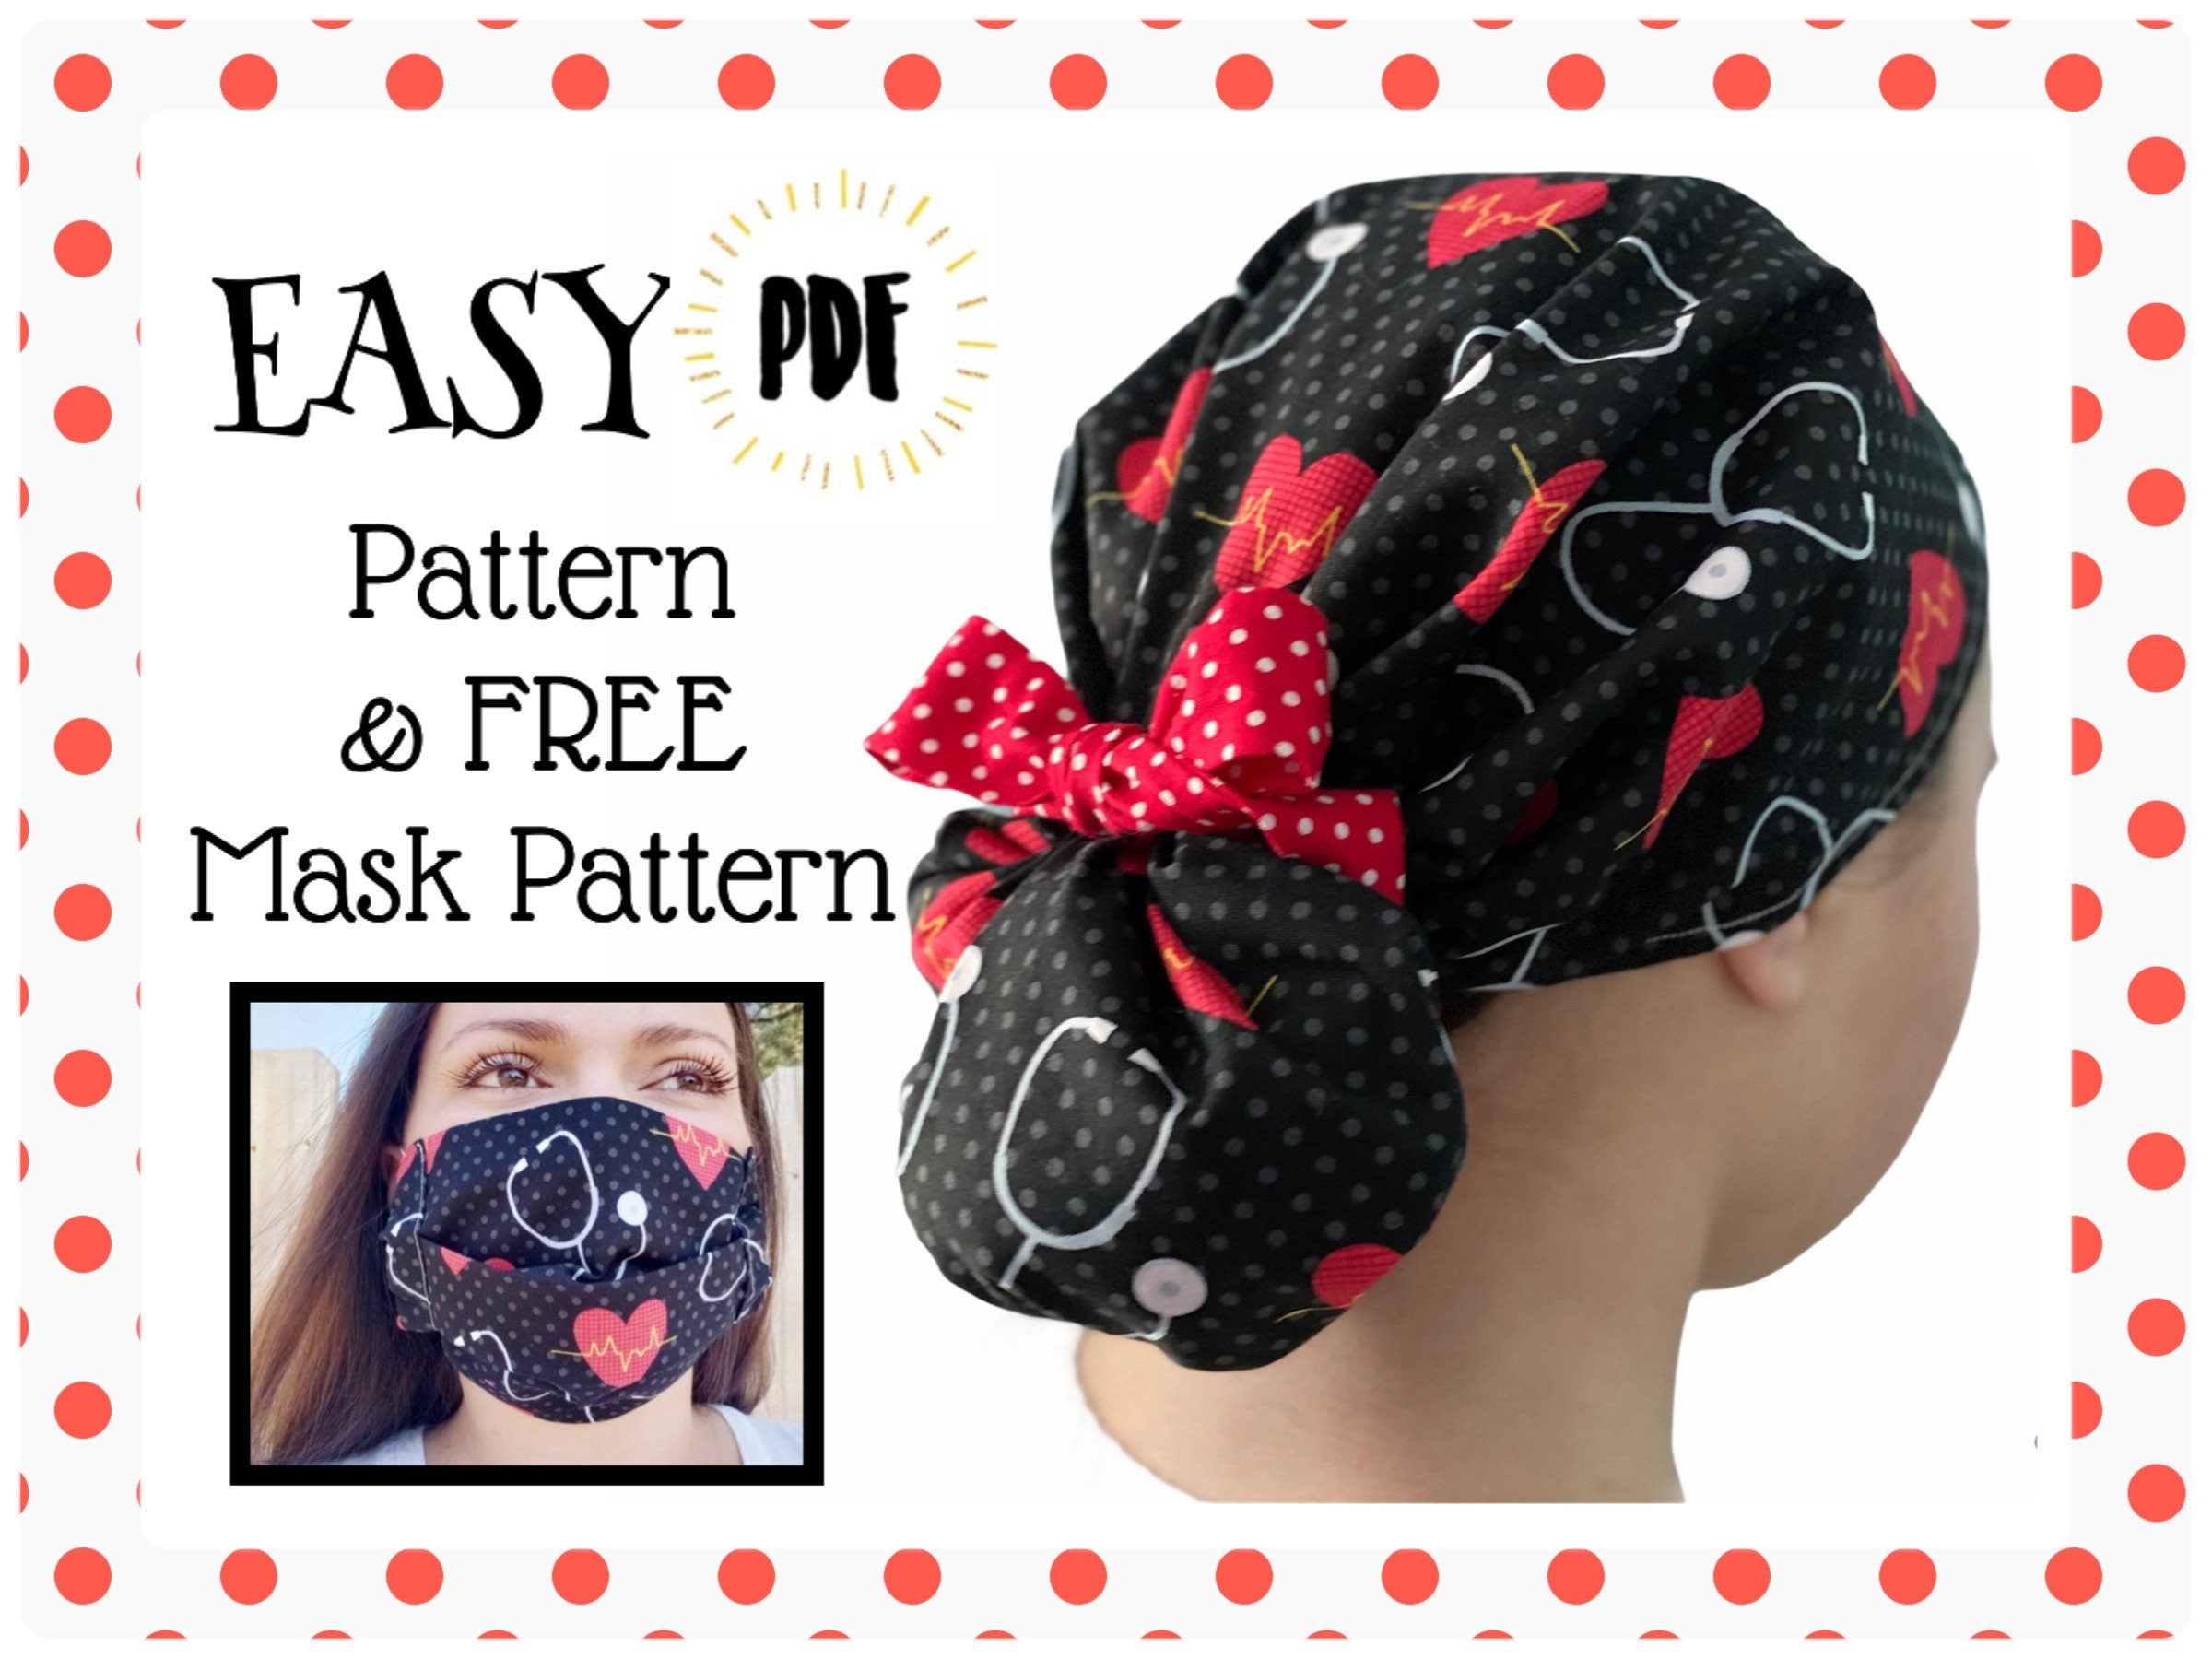 Drawstring scrub cap pattern and face mask pattern 5 sizes